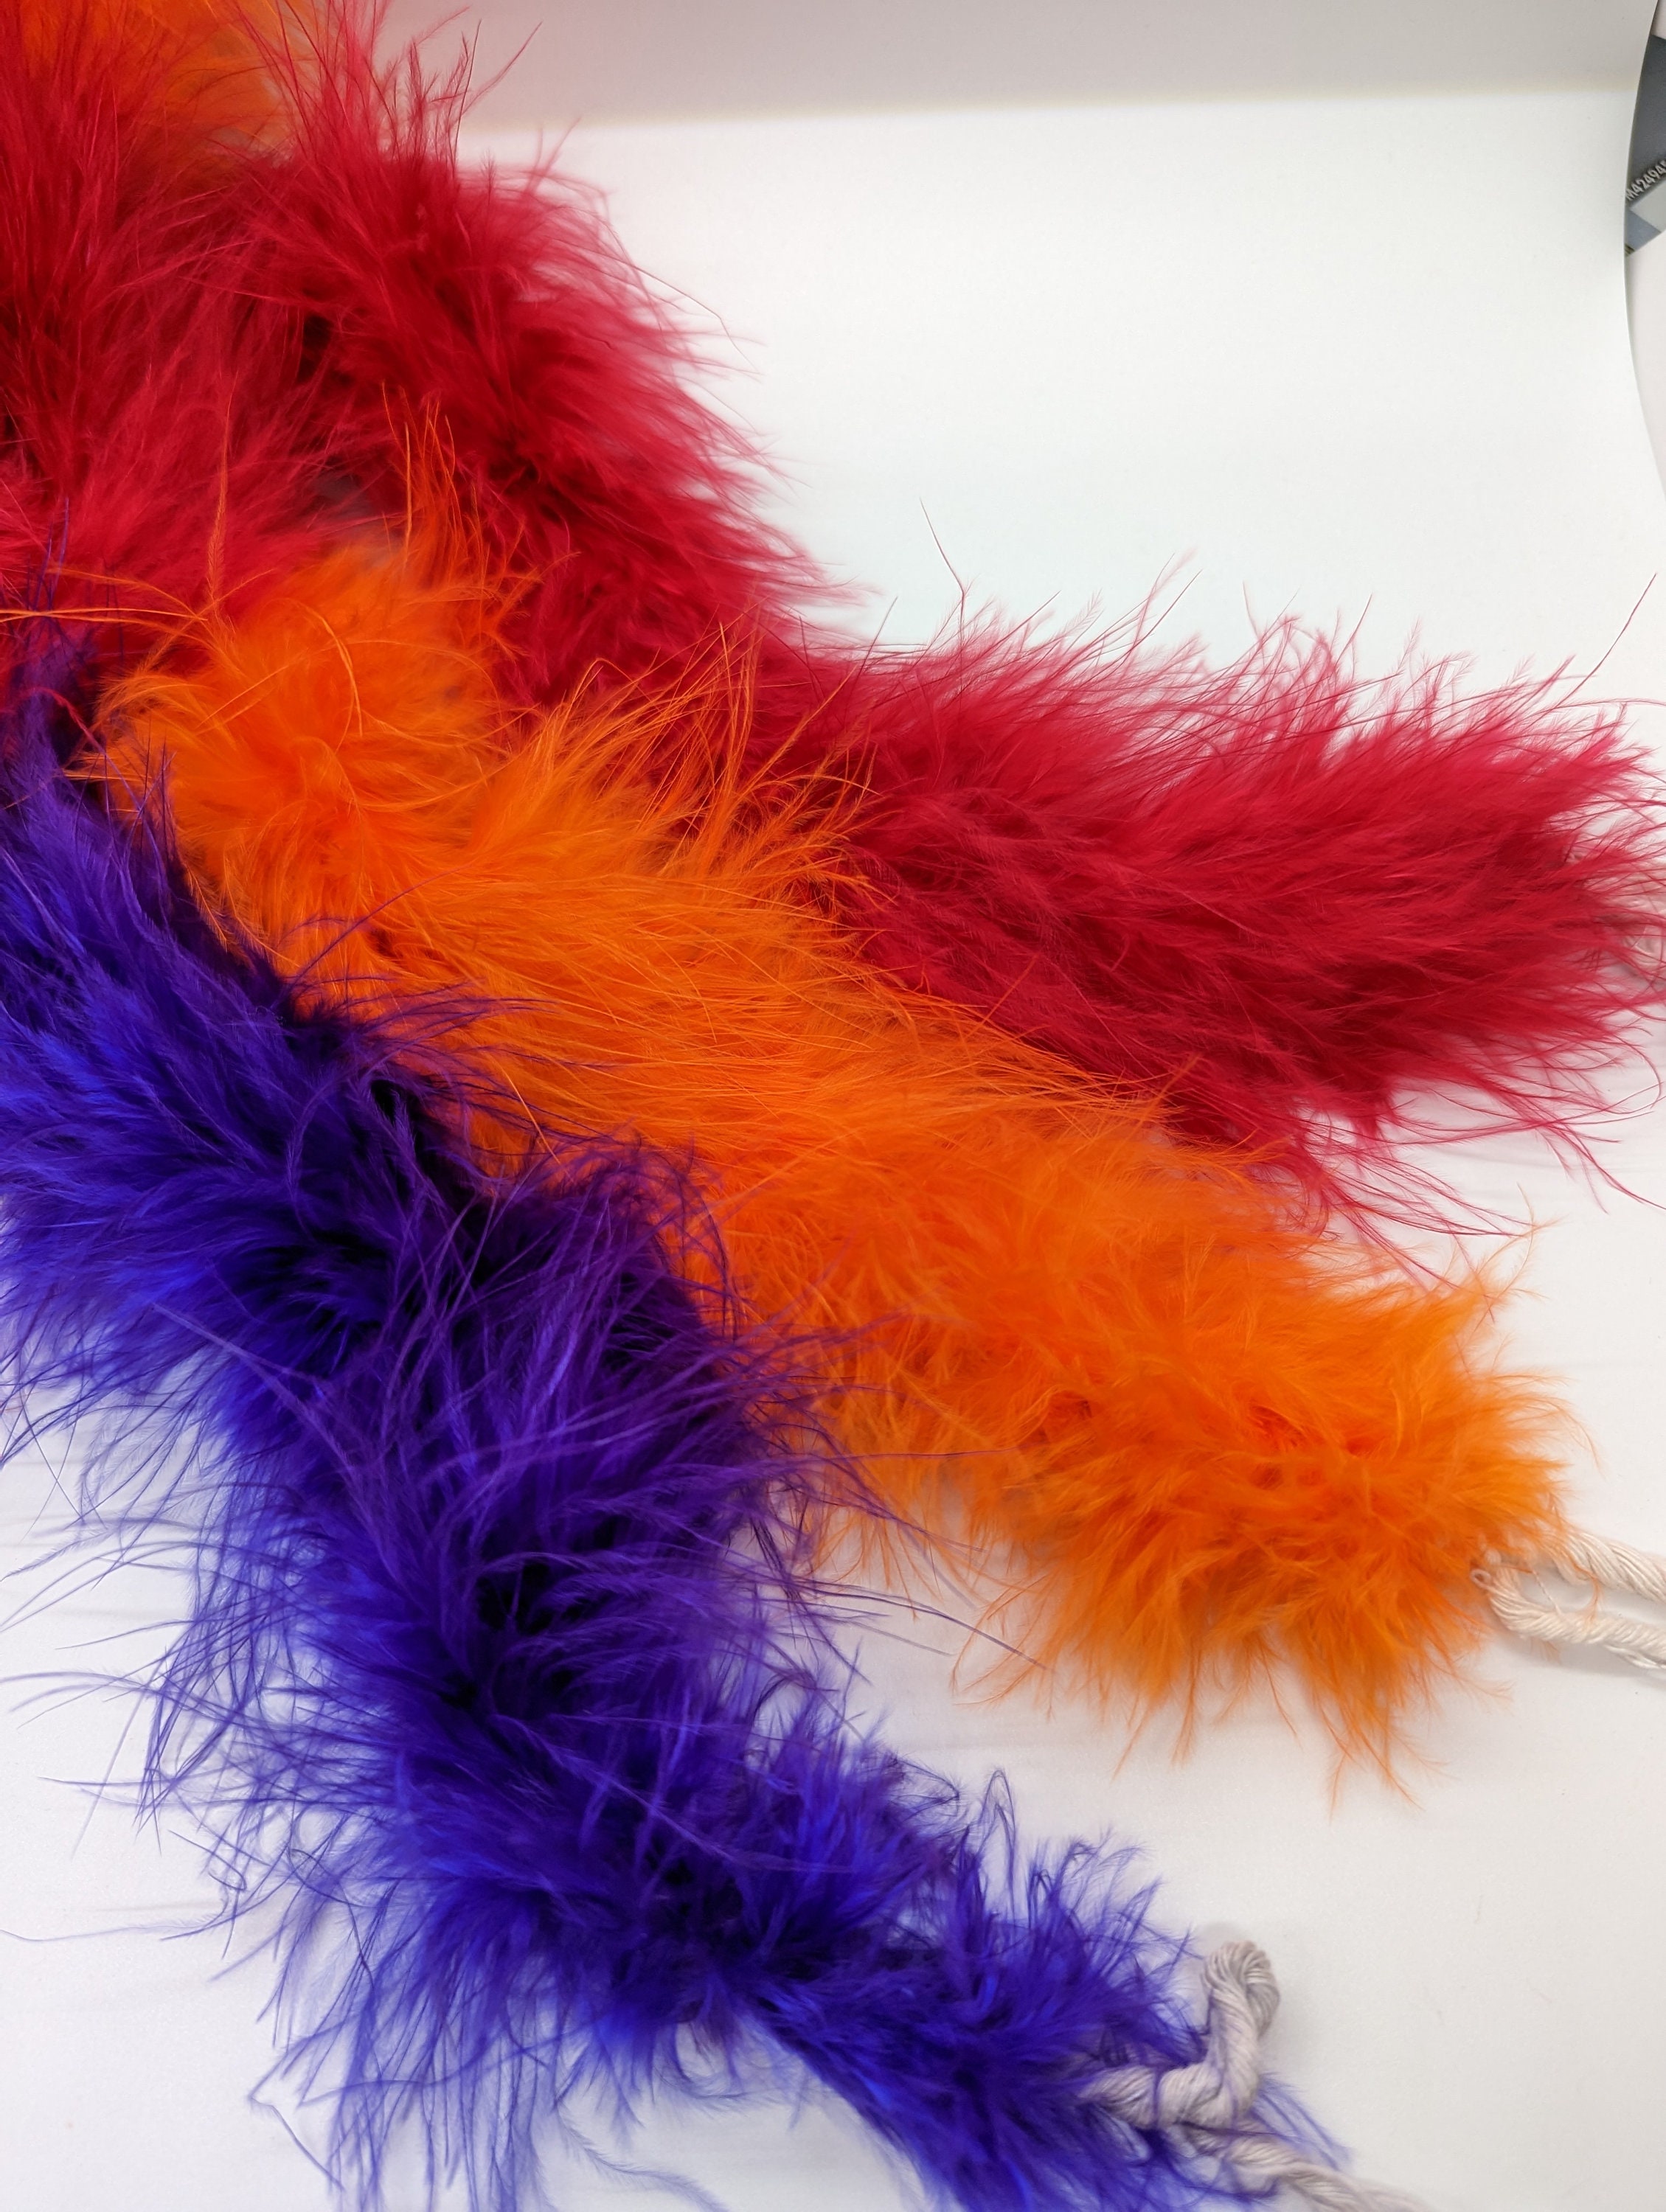 Purple Ostrich Feathers, 1 Yard Purple Ostrich Fringe Trim Wholesale  Feather bulk : 2112 